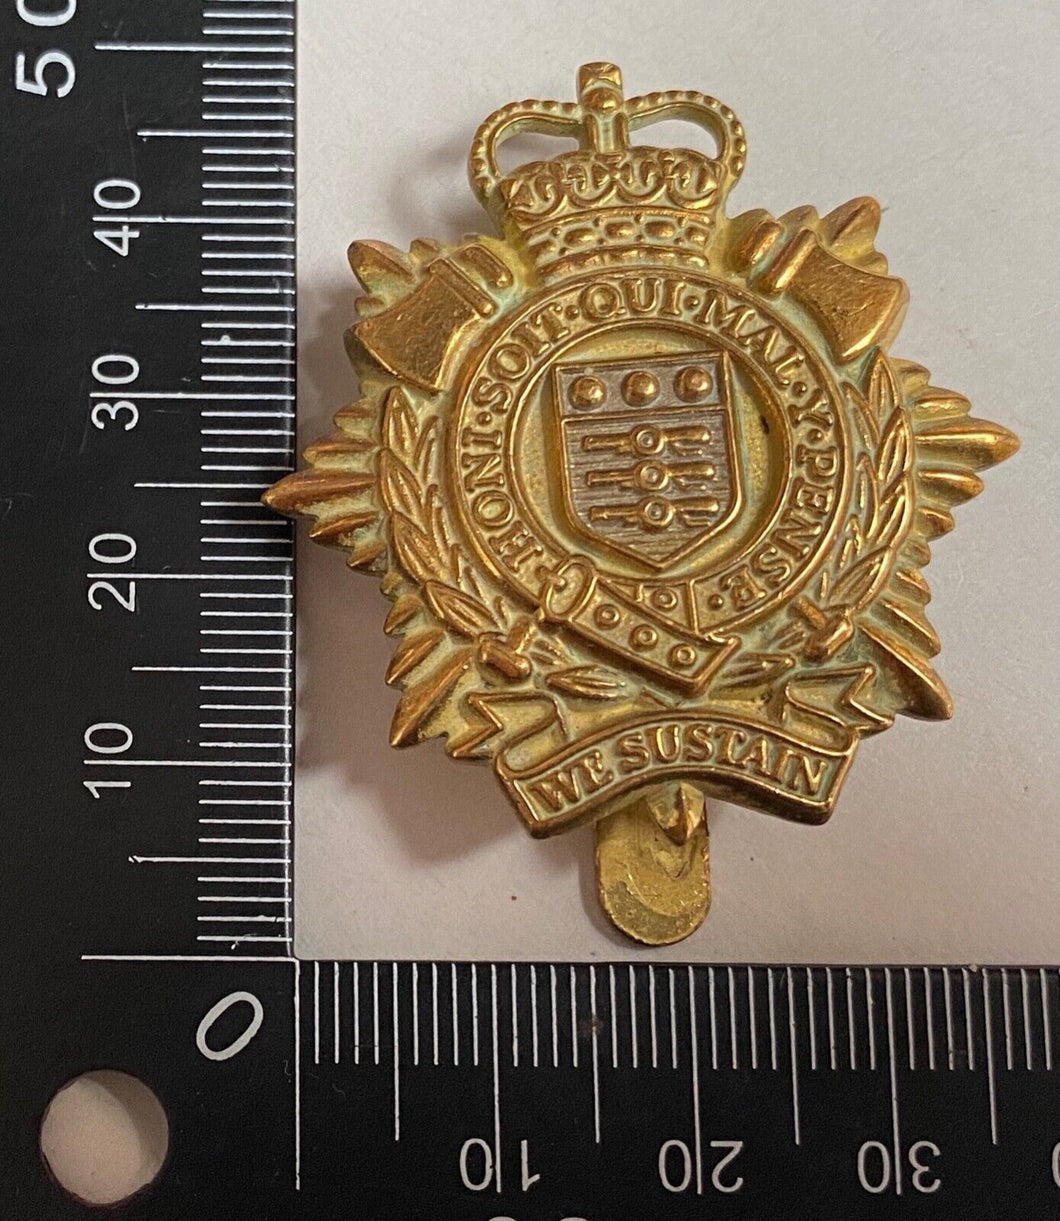 A gilt metal British Army Logistics Corps cap badge.